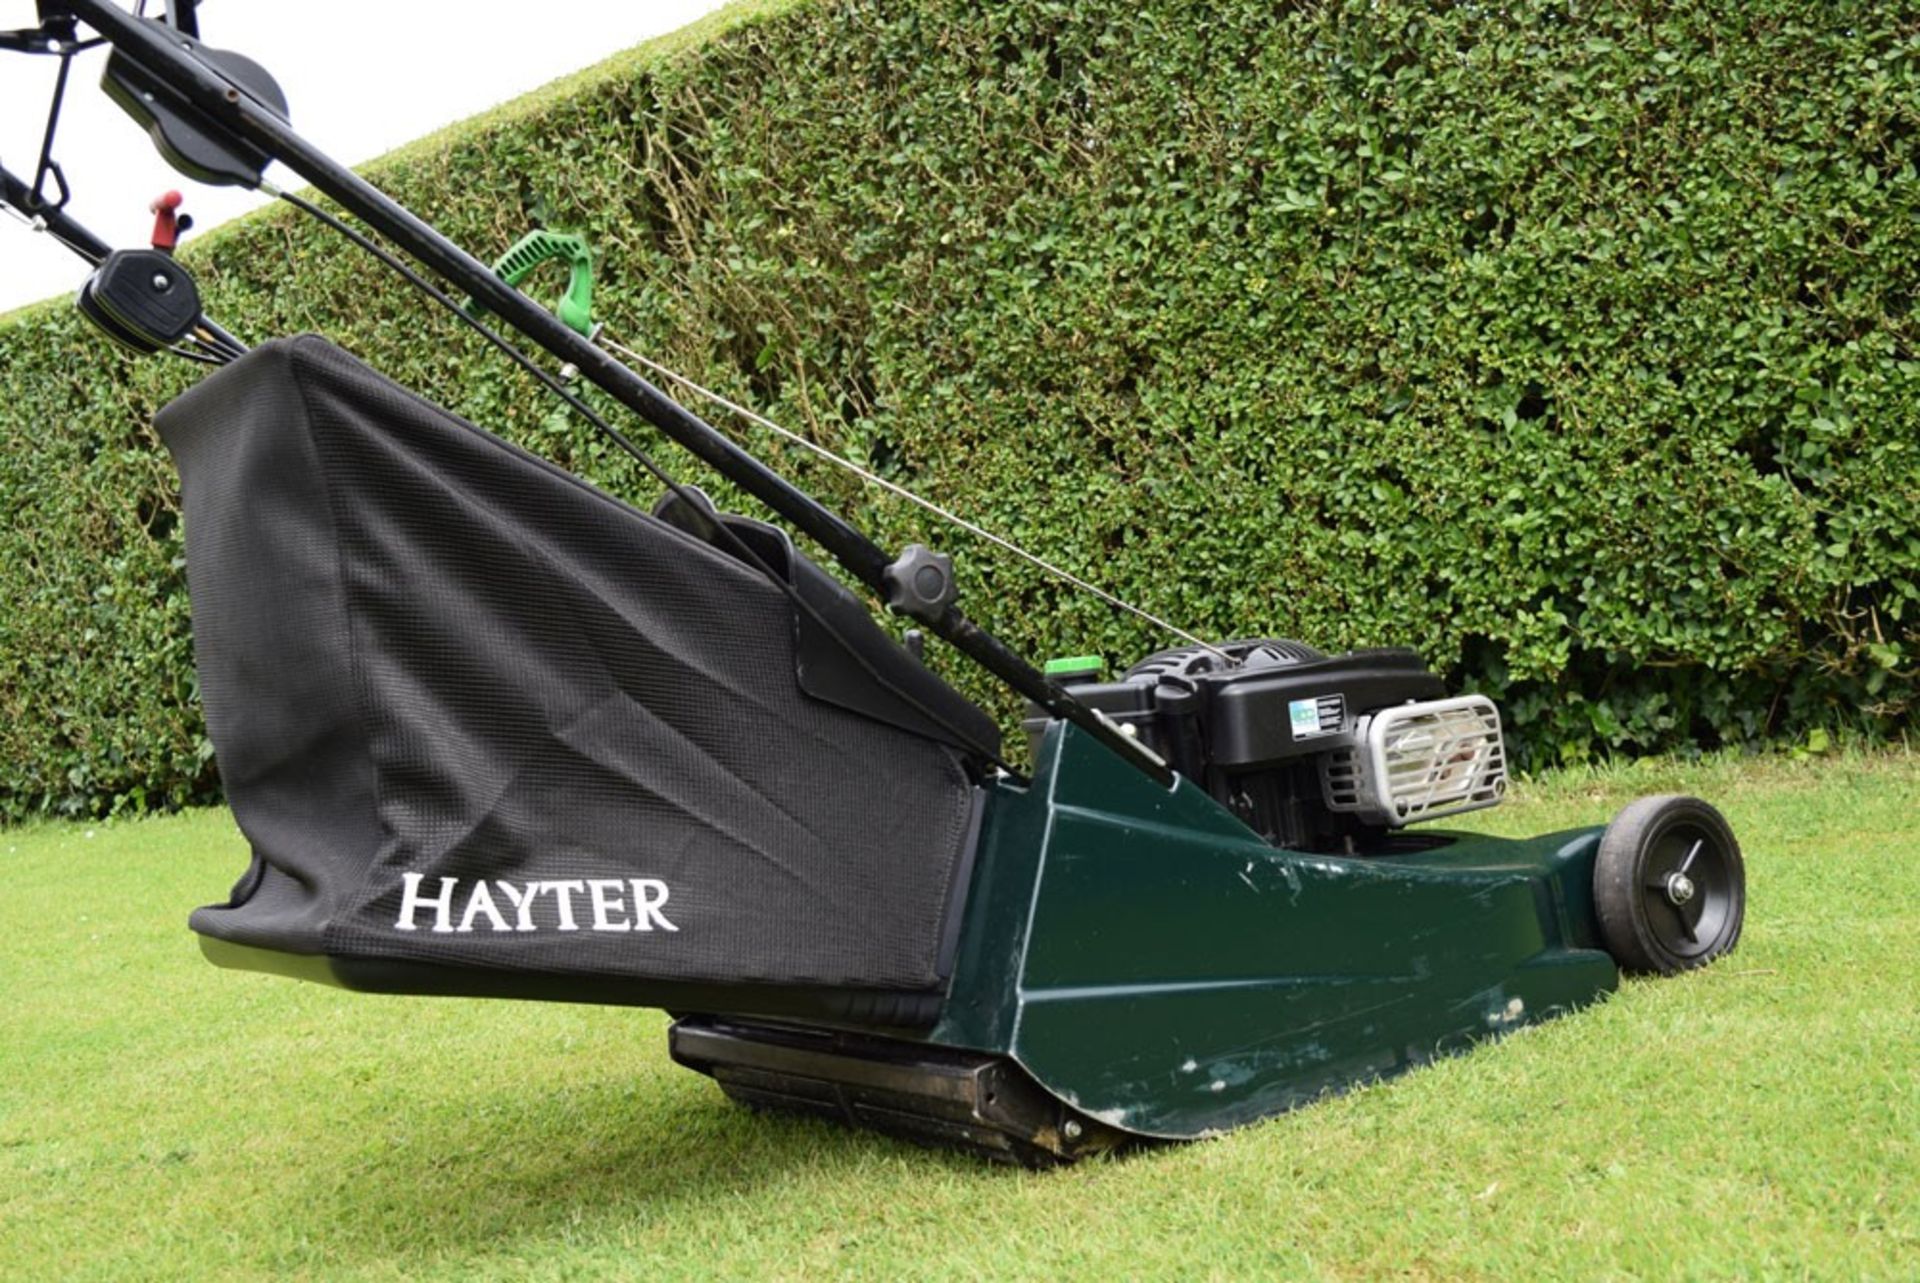 2013 Hayter Harrier 56 Auto Drive VS BBC 22" Lawn Mower - Image 7 of 8